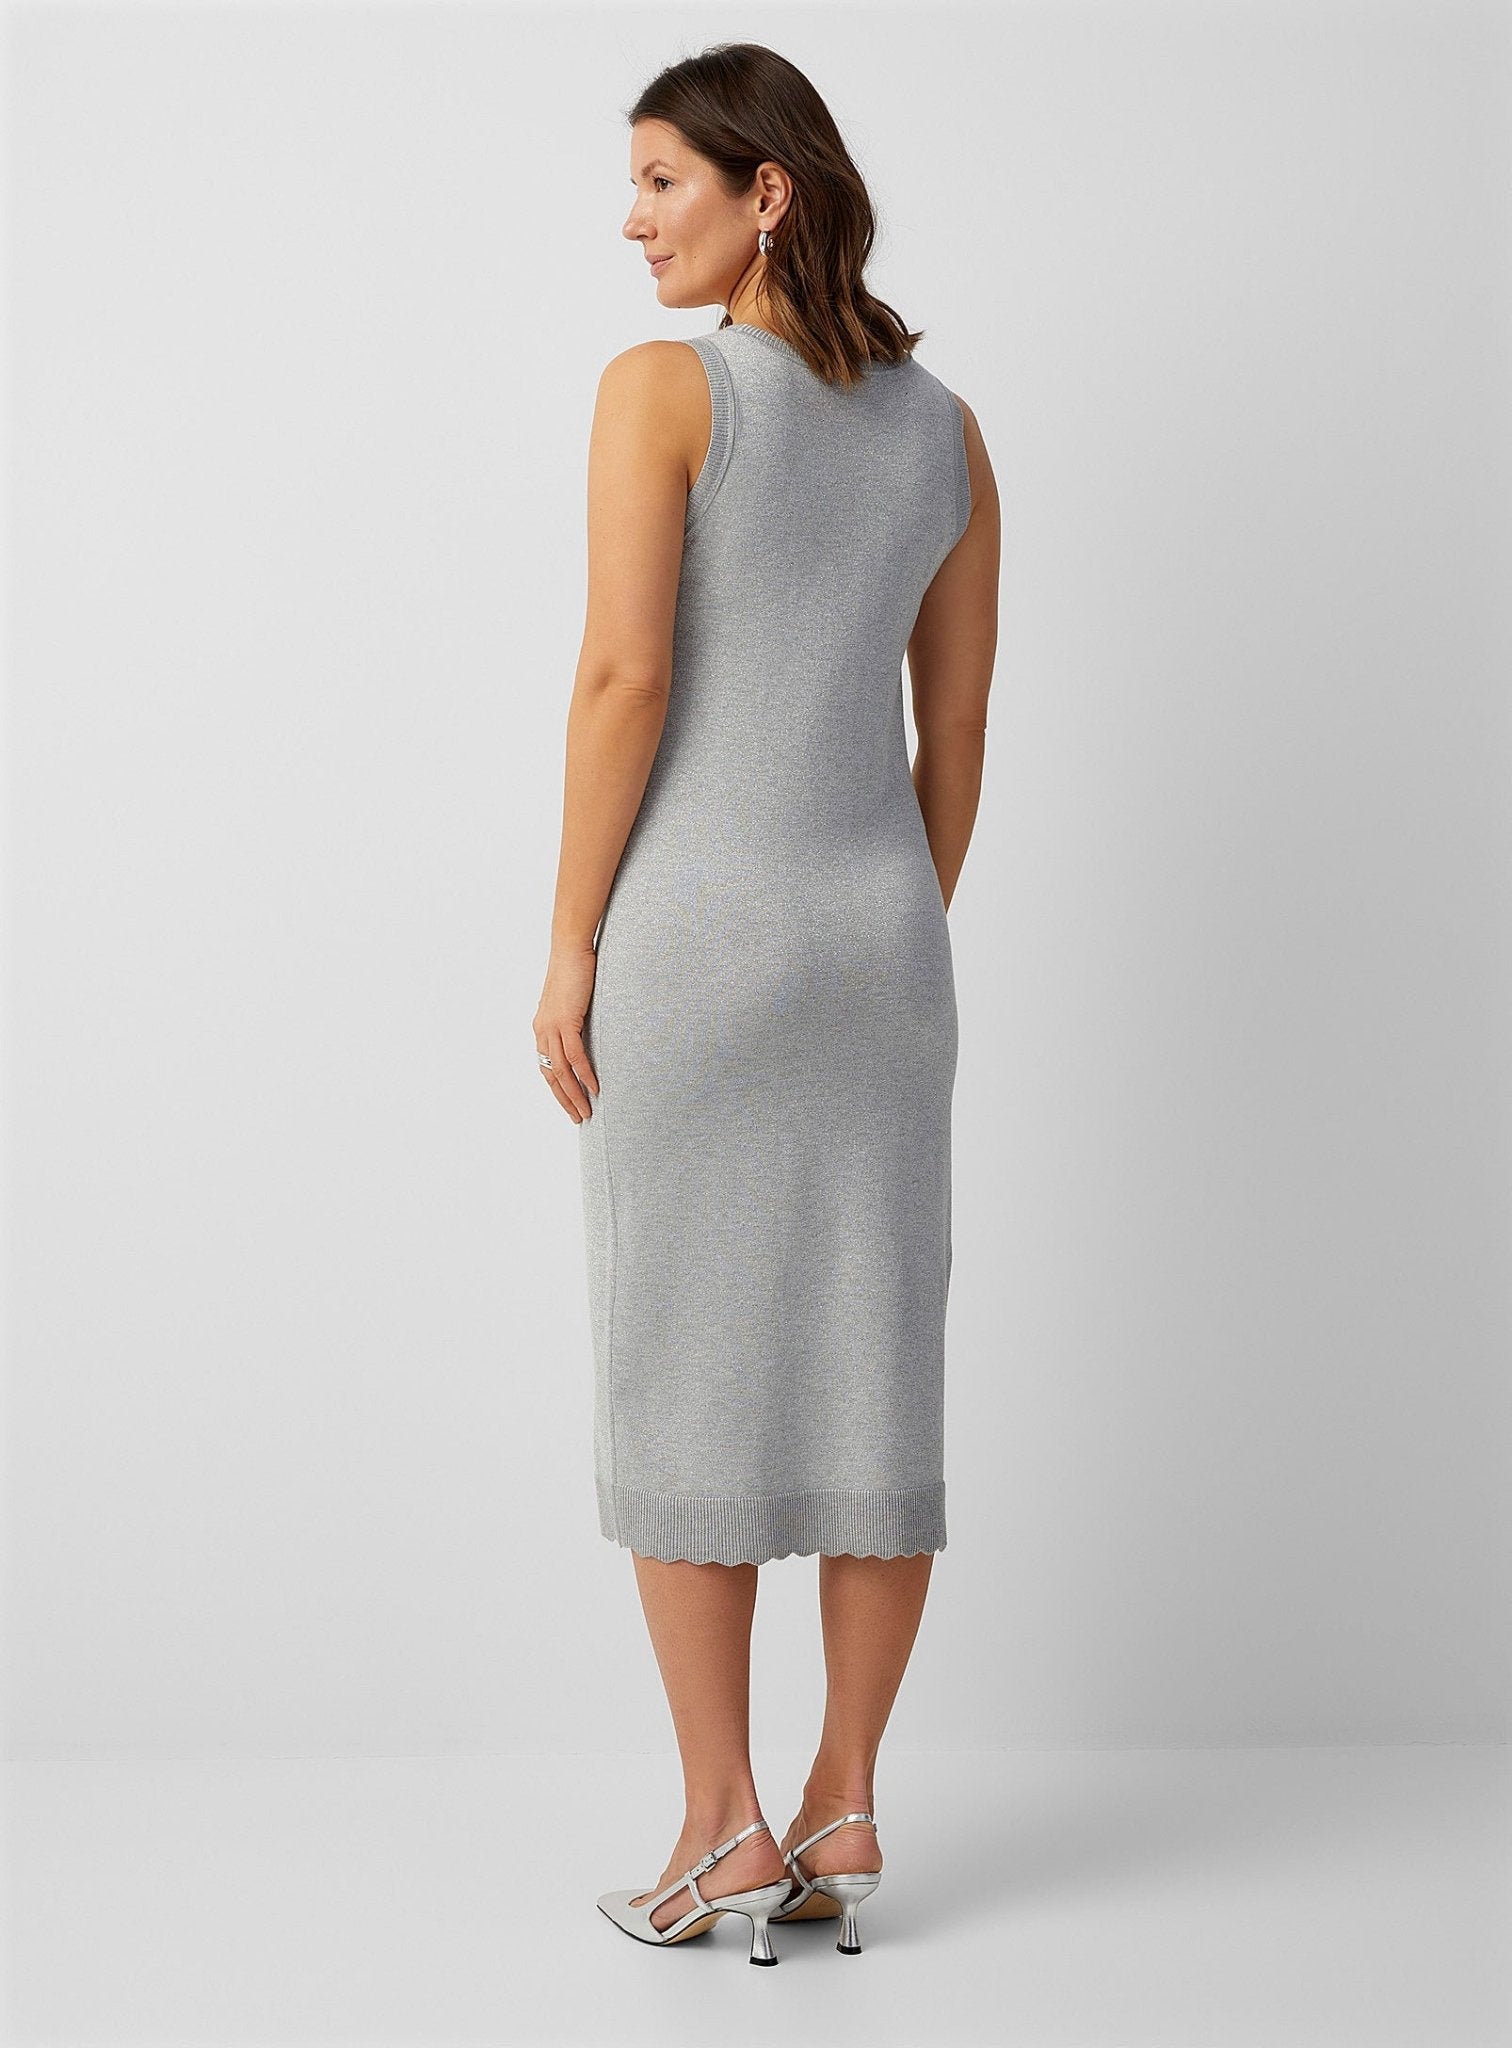 Mila Shimmer Dress - Silver - Blue Sky Fashions & Lingerie